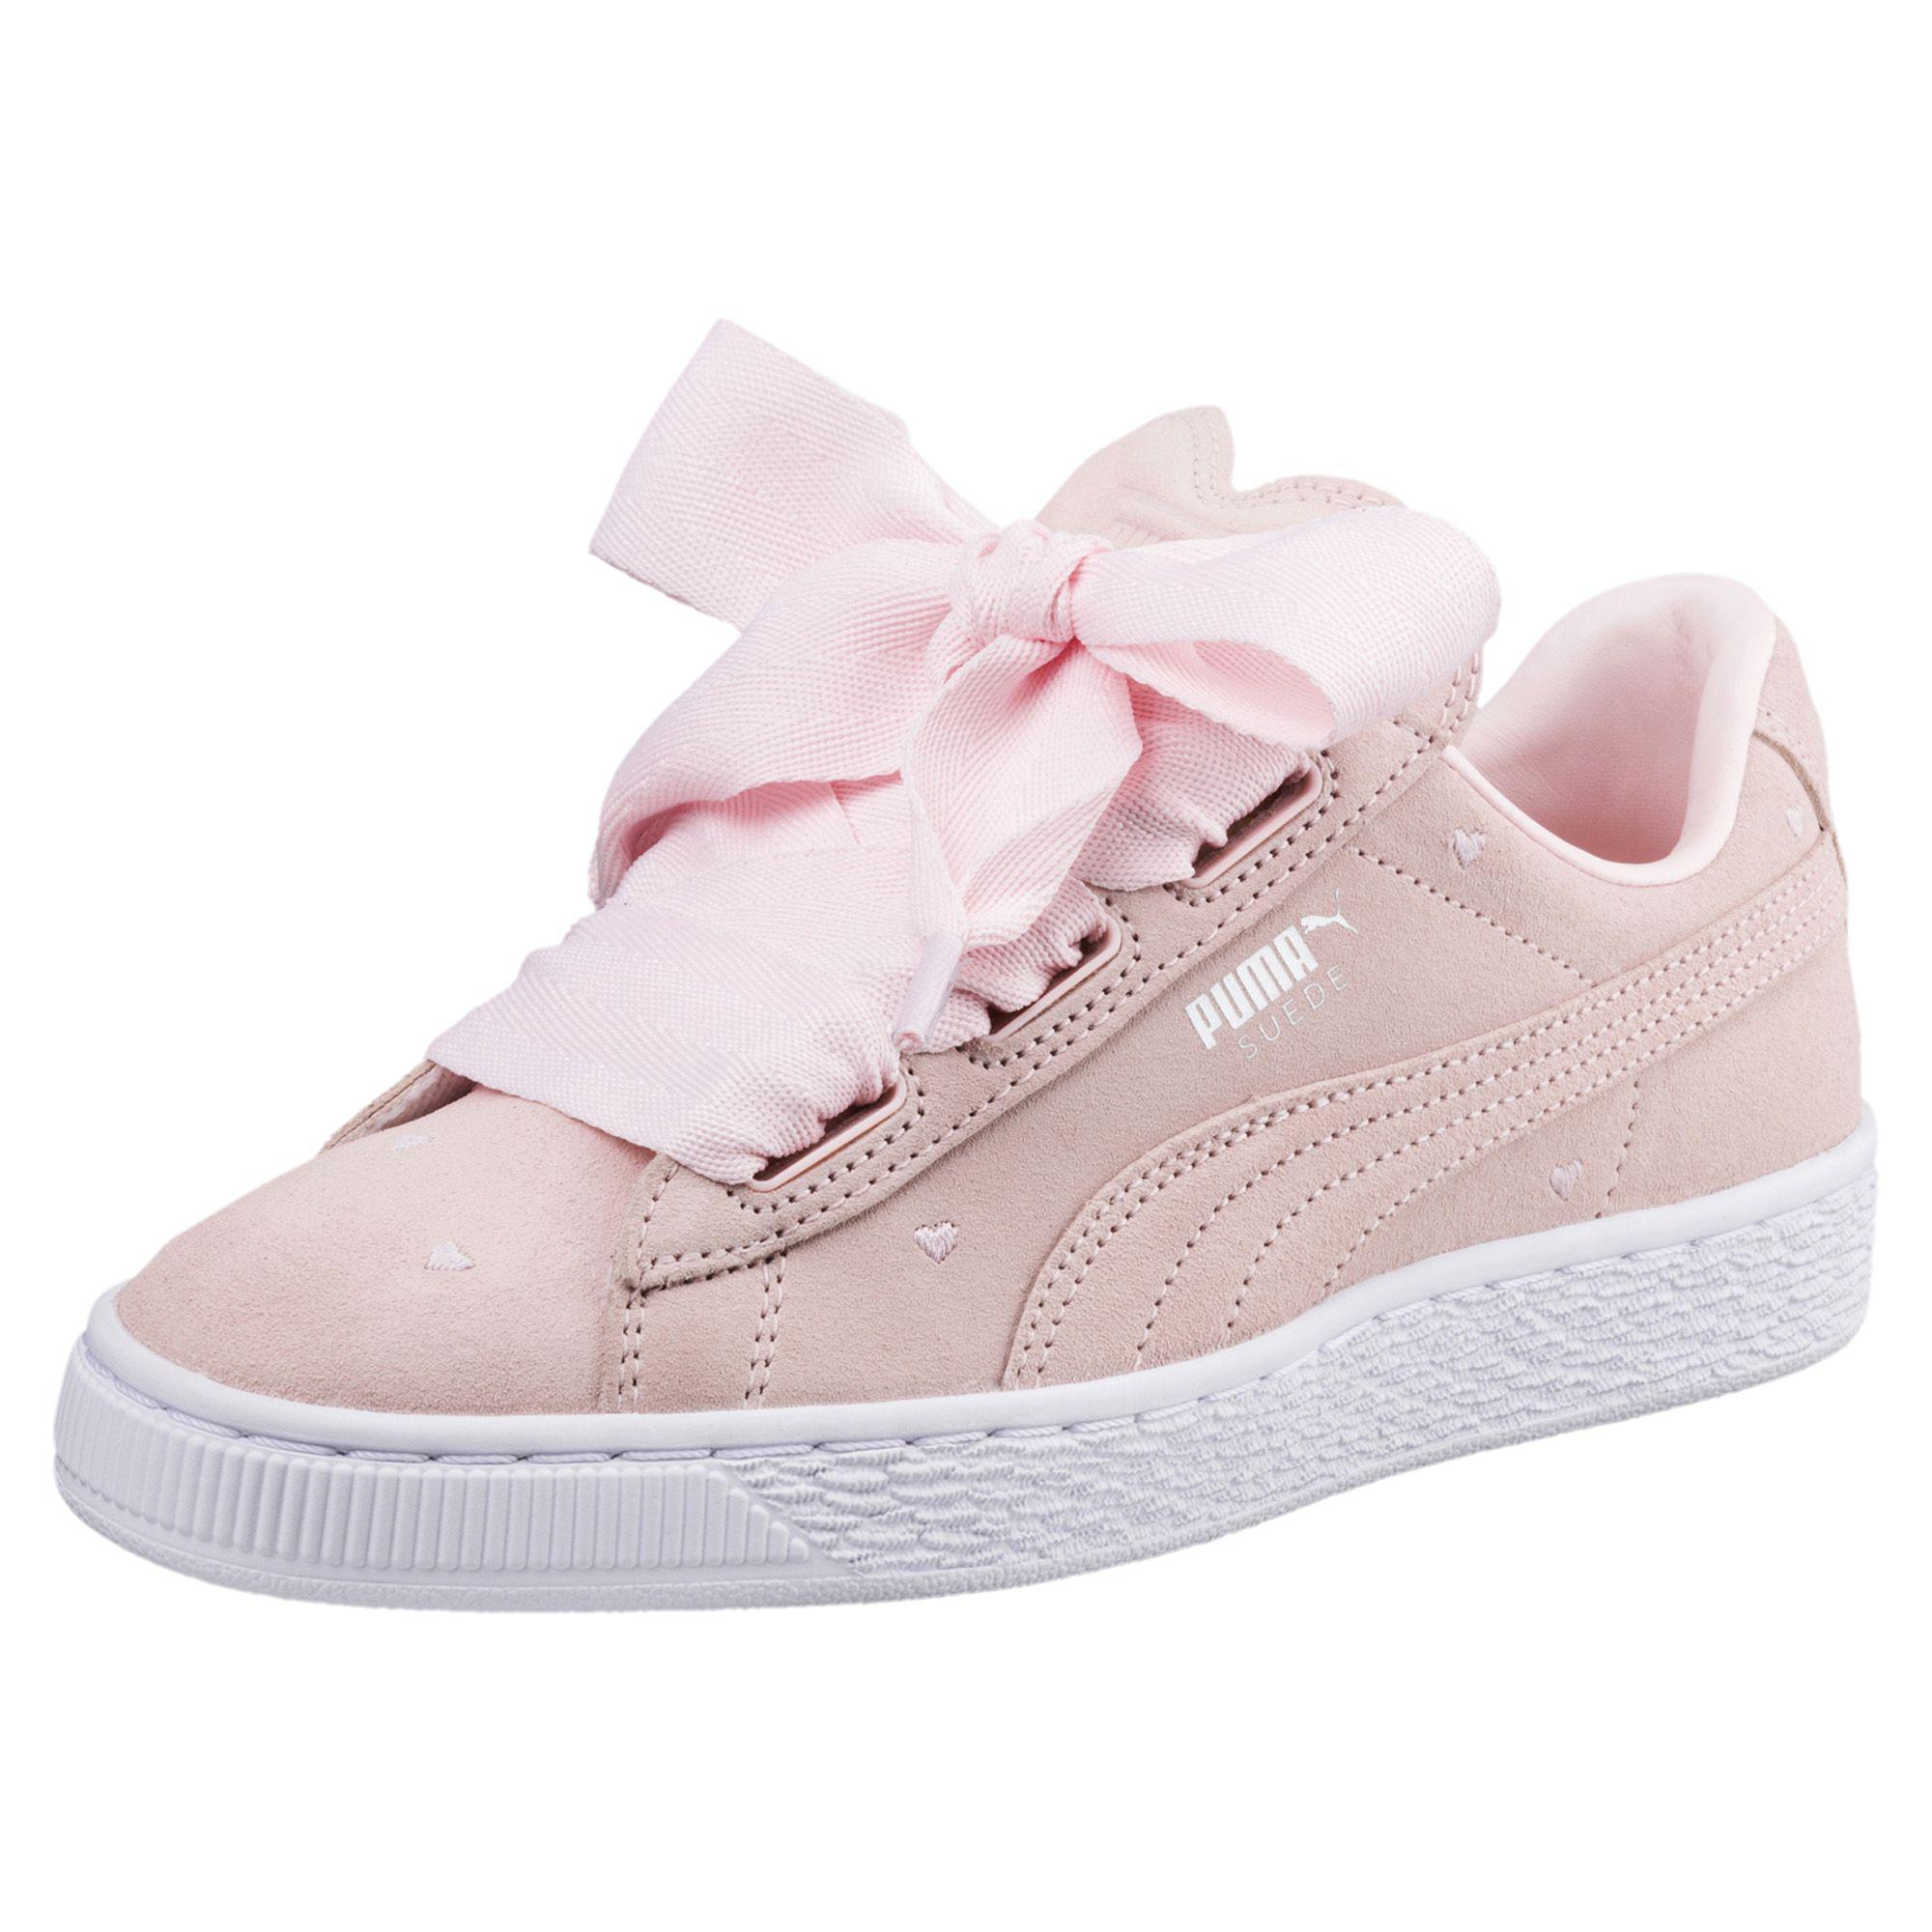 PUMA Suede Heart Valentine Jr Sneakers in Pearl-Pearl (Pink) - Lyst